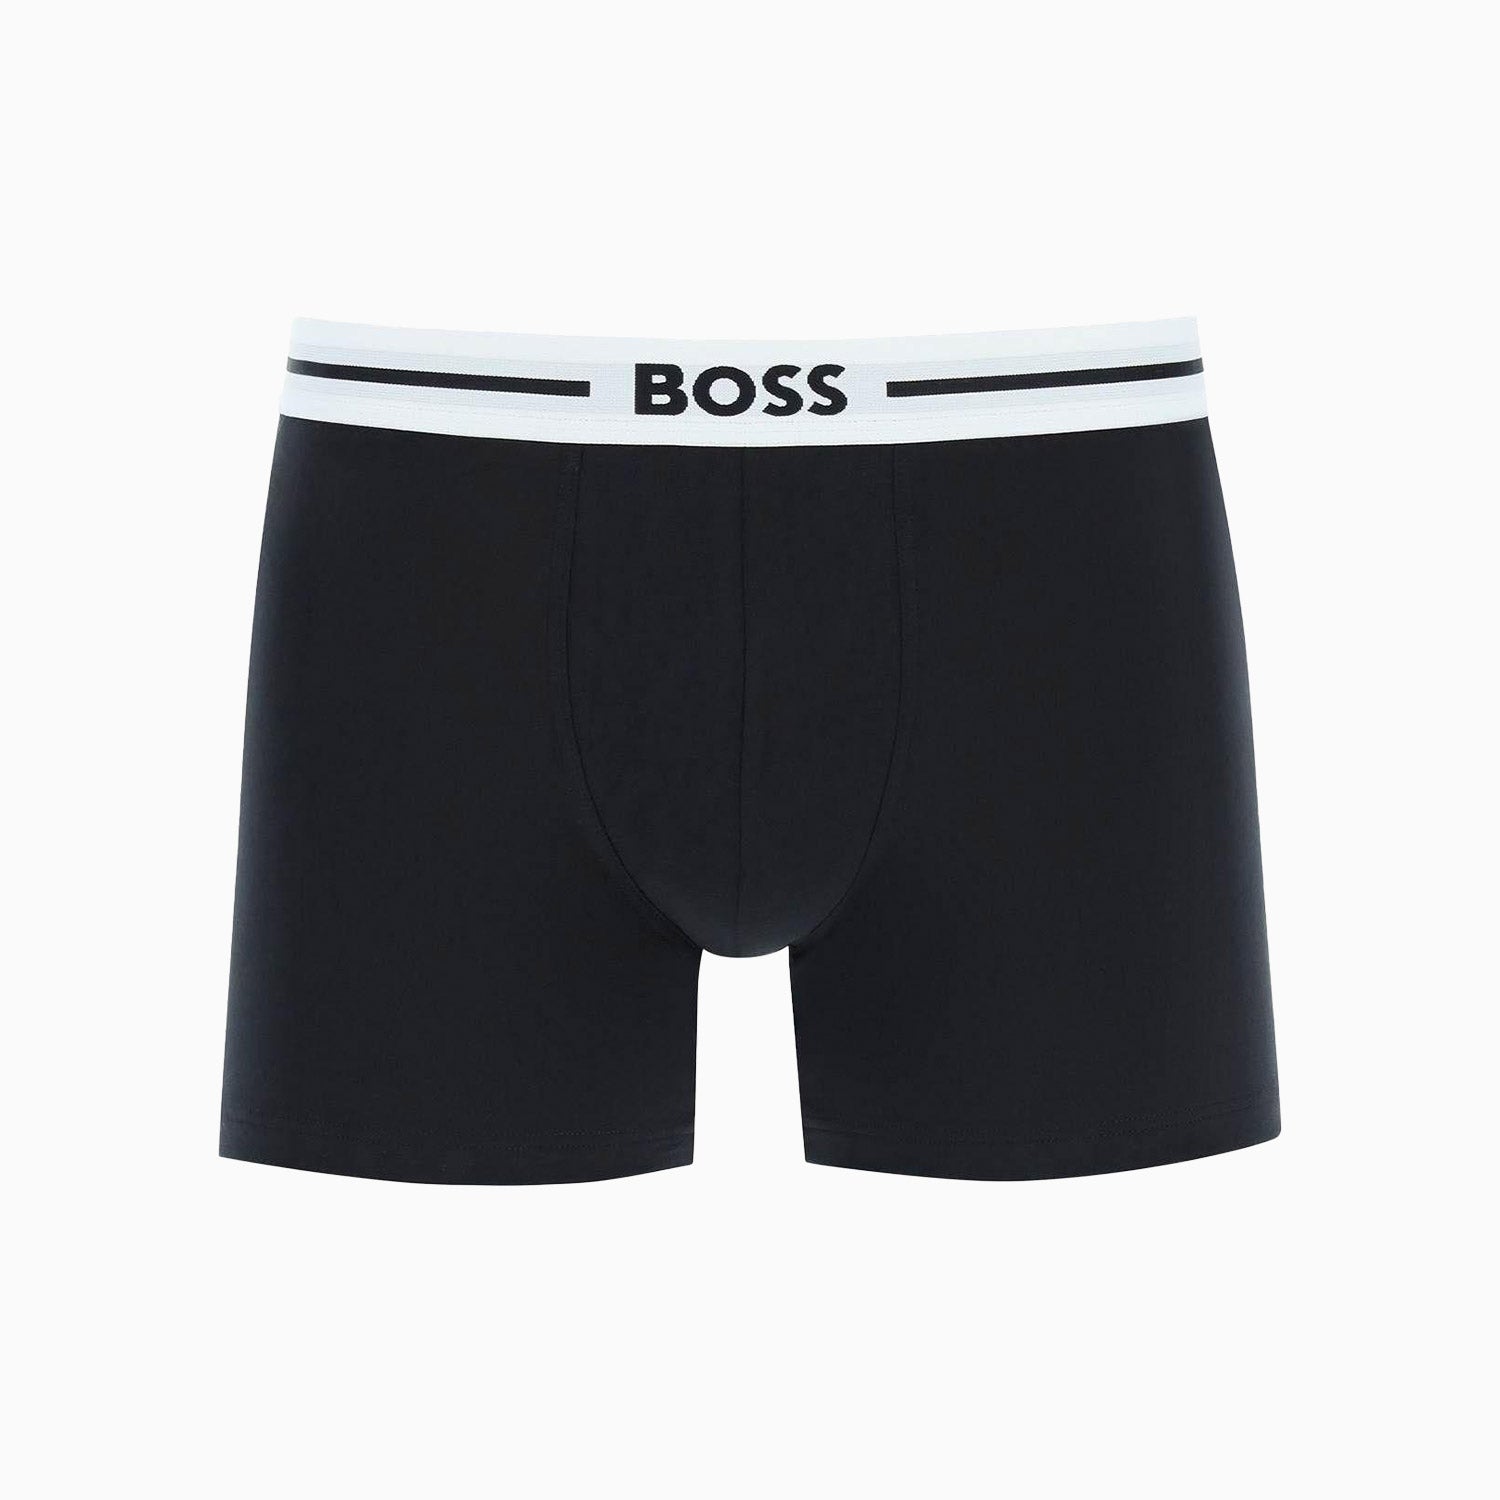 hugo-boss-mens-three-pack-logo-stretch-cotton-briefs-boxers-50489608-964